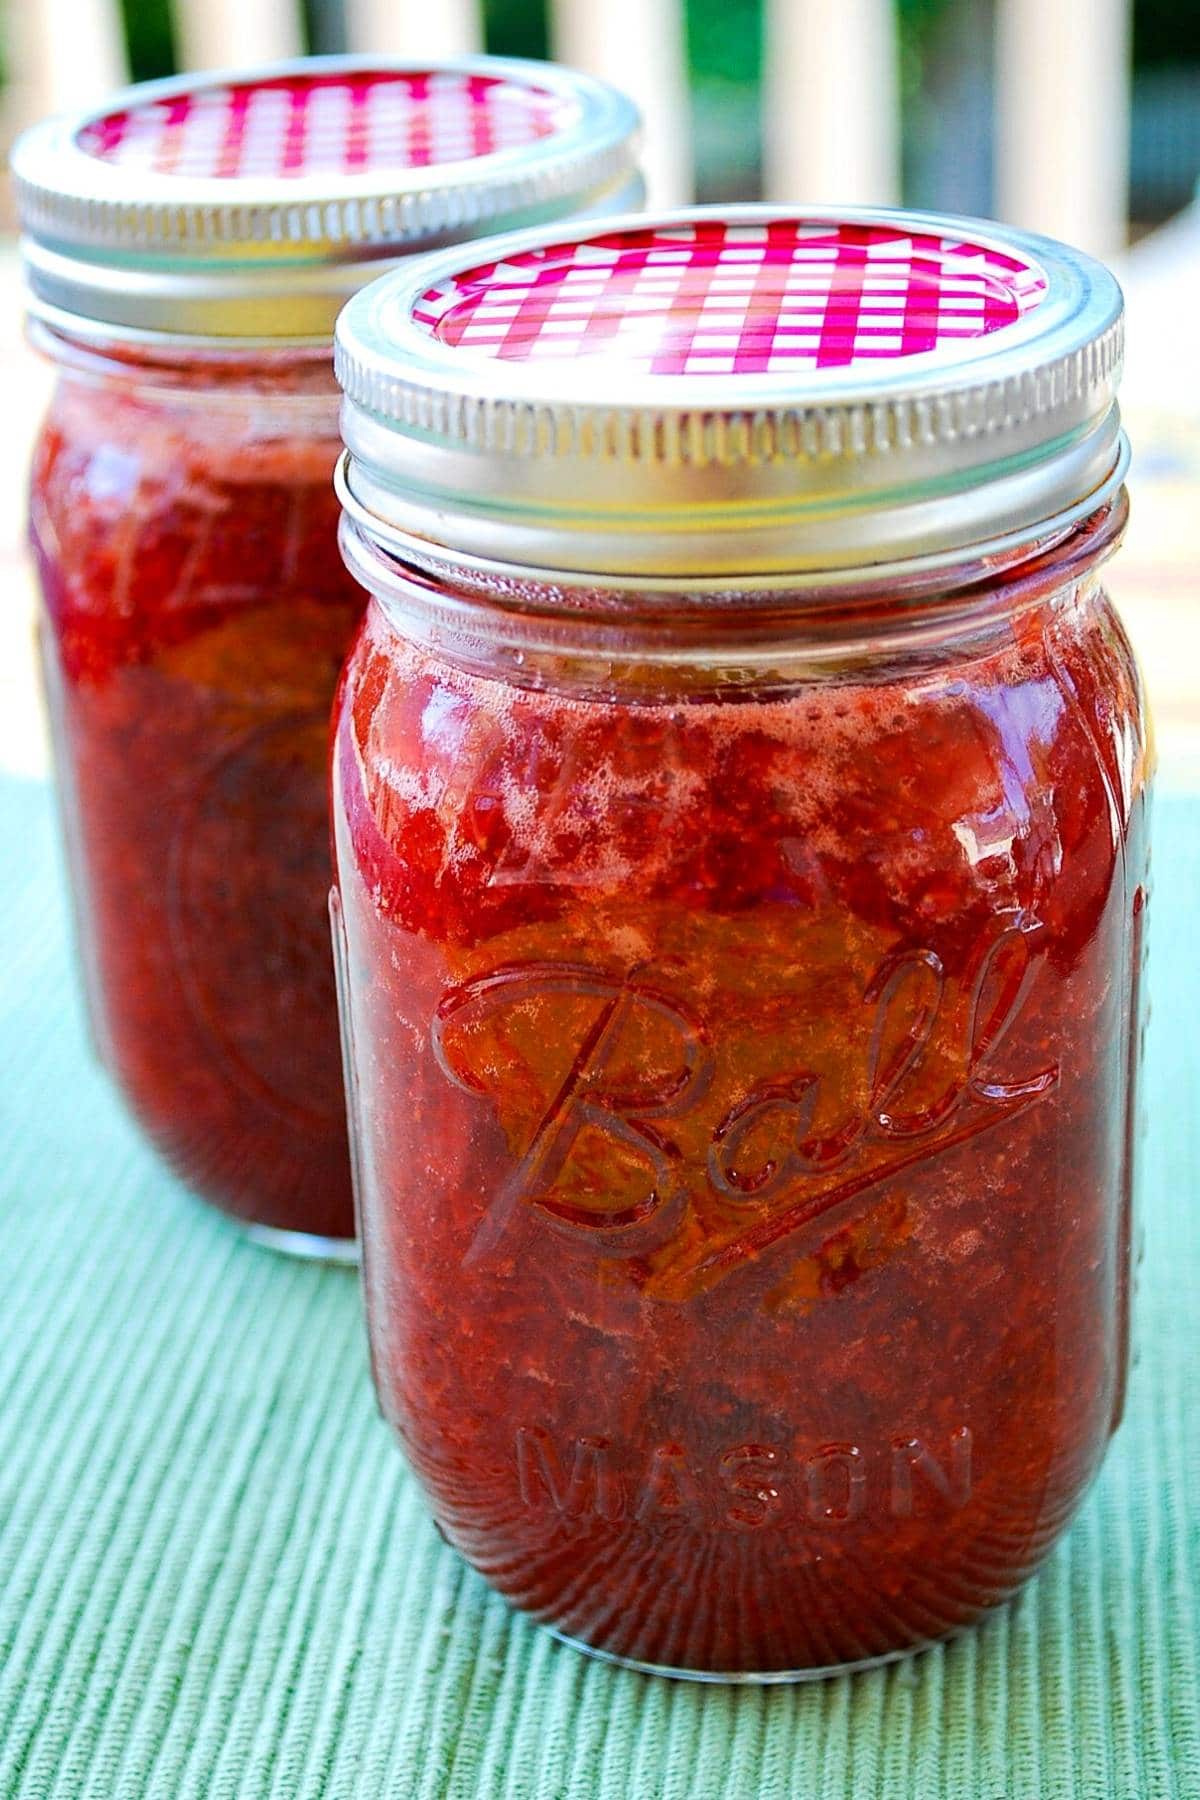 2 large jars of low sugar strawberry jam